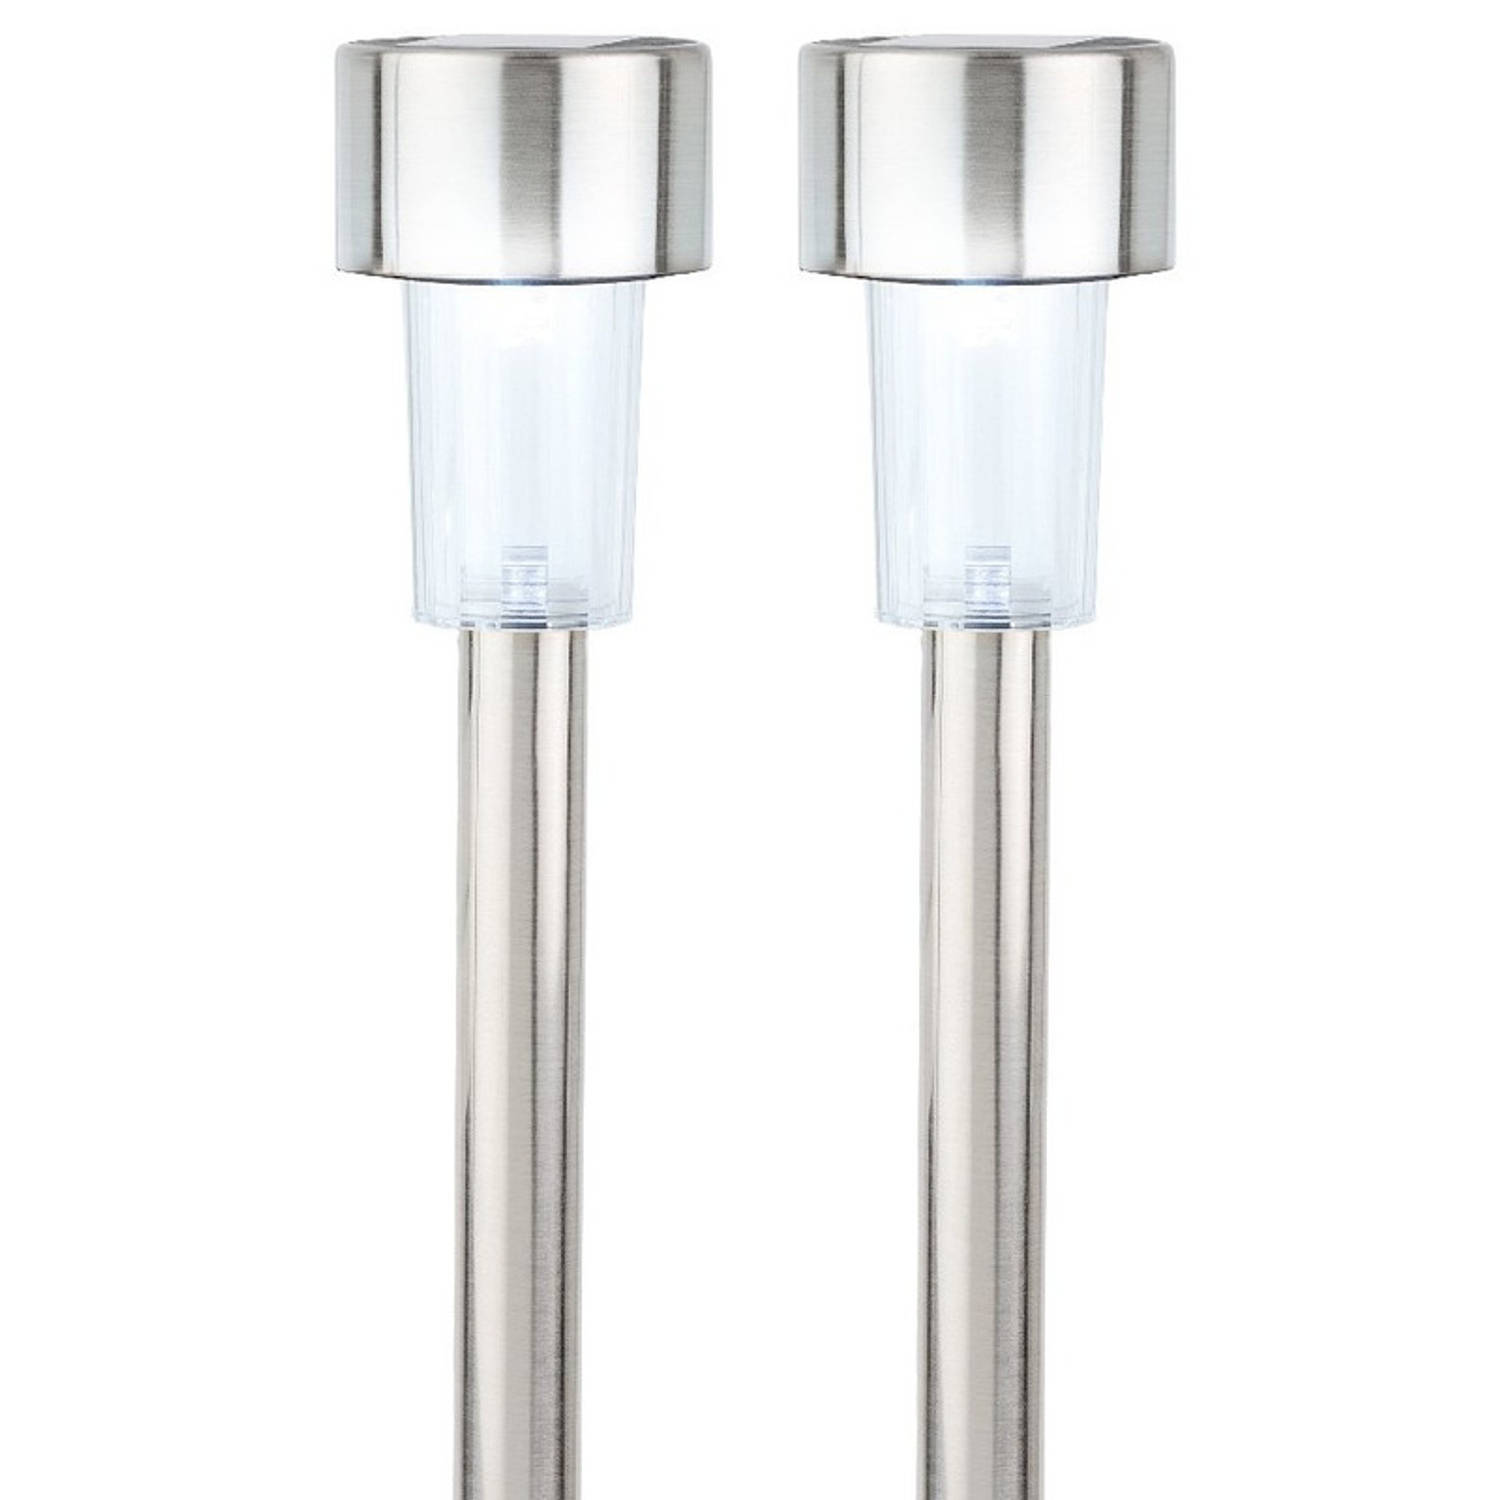 2x Buitenlampen/tuinlampen 36 cm RVS zilver op steker koel wit - Prikspotjes